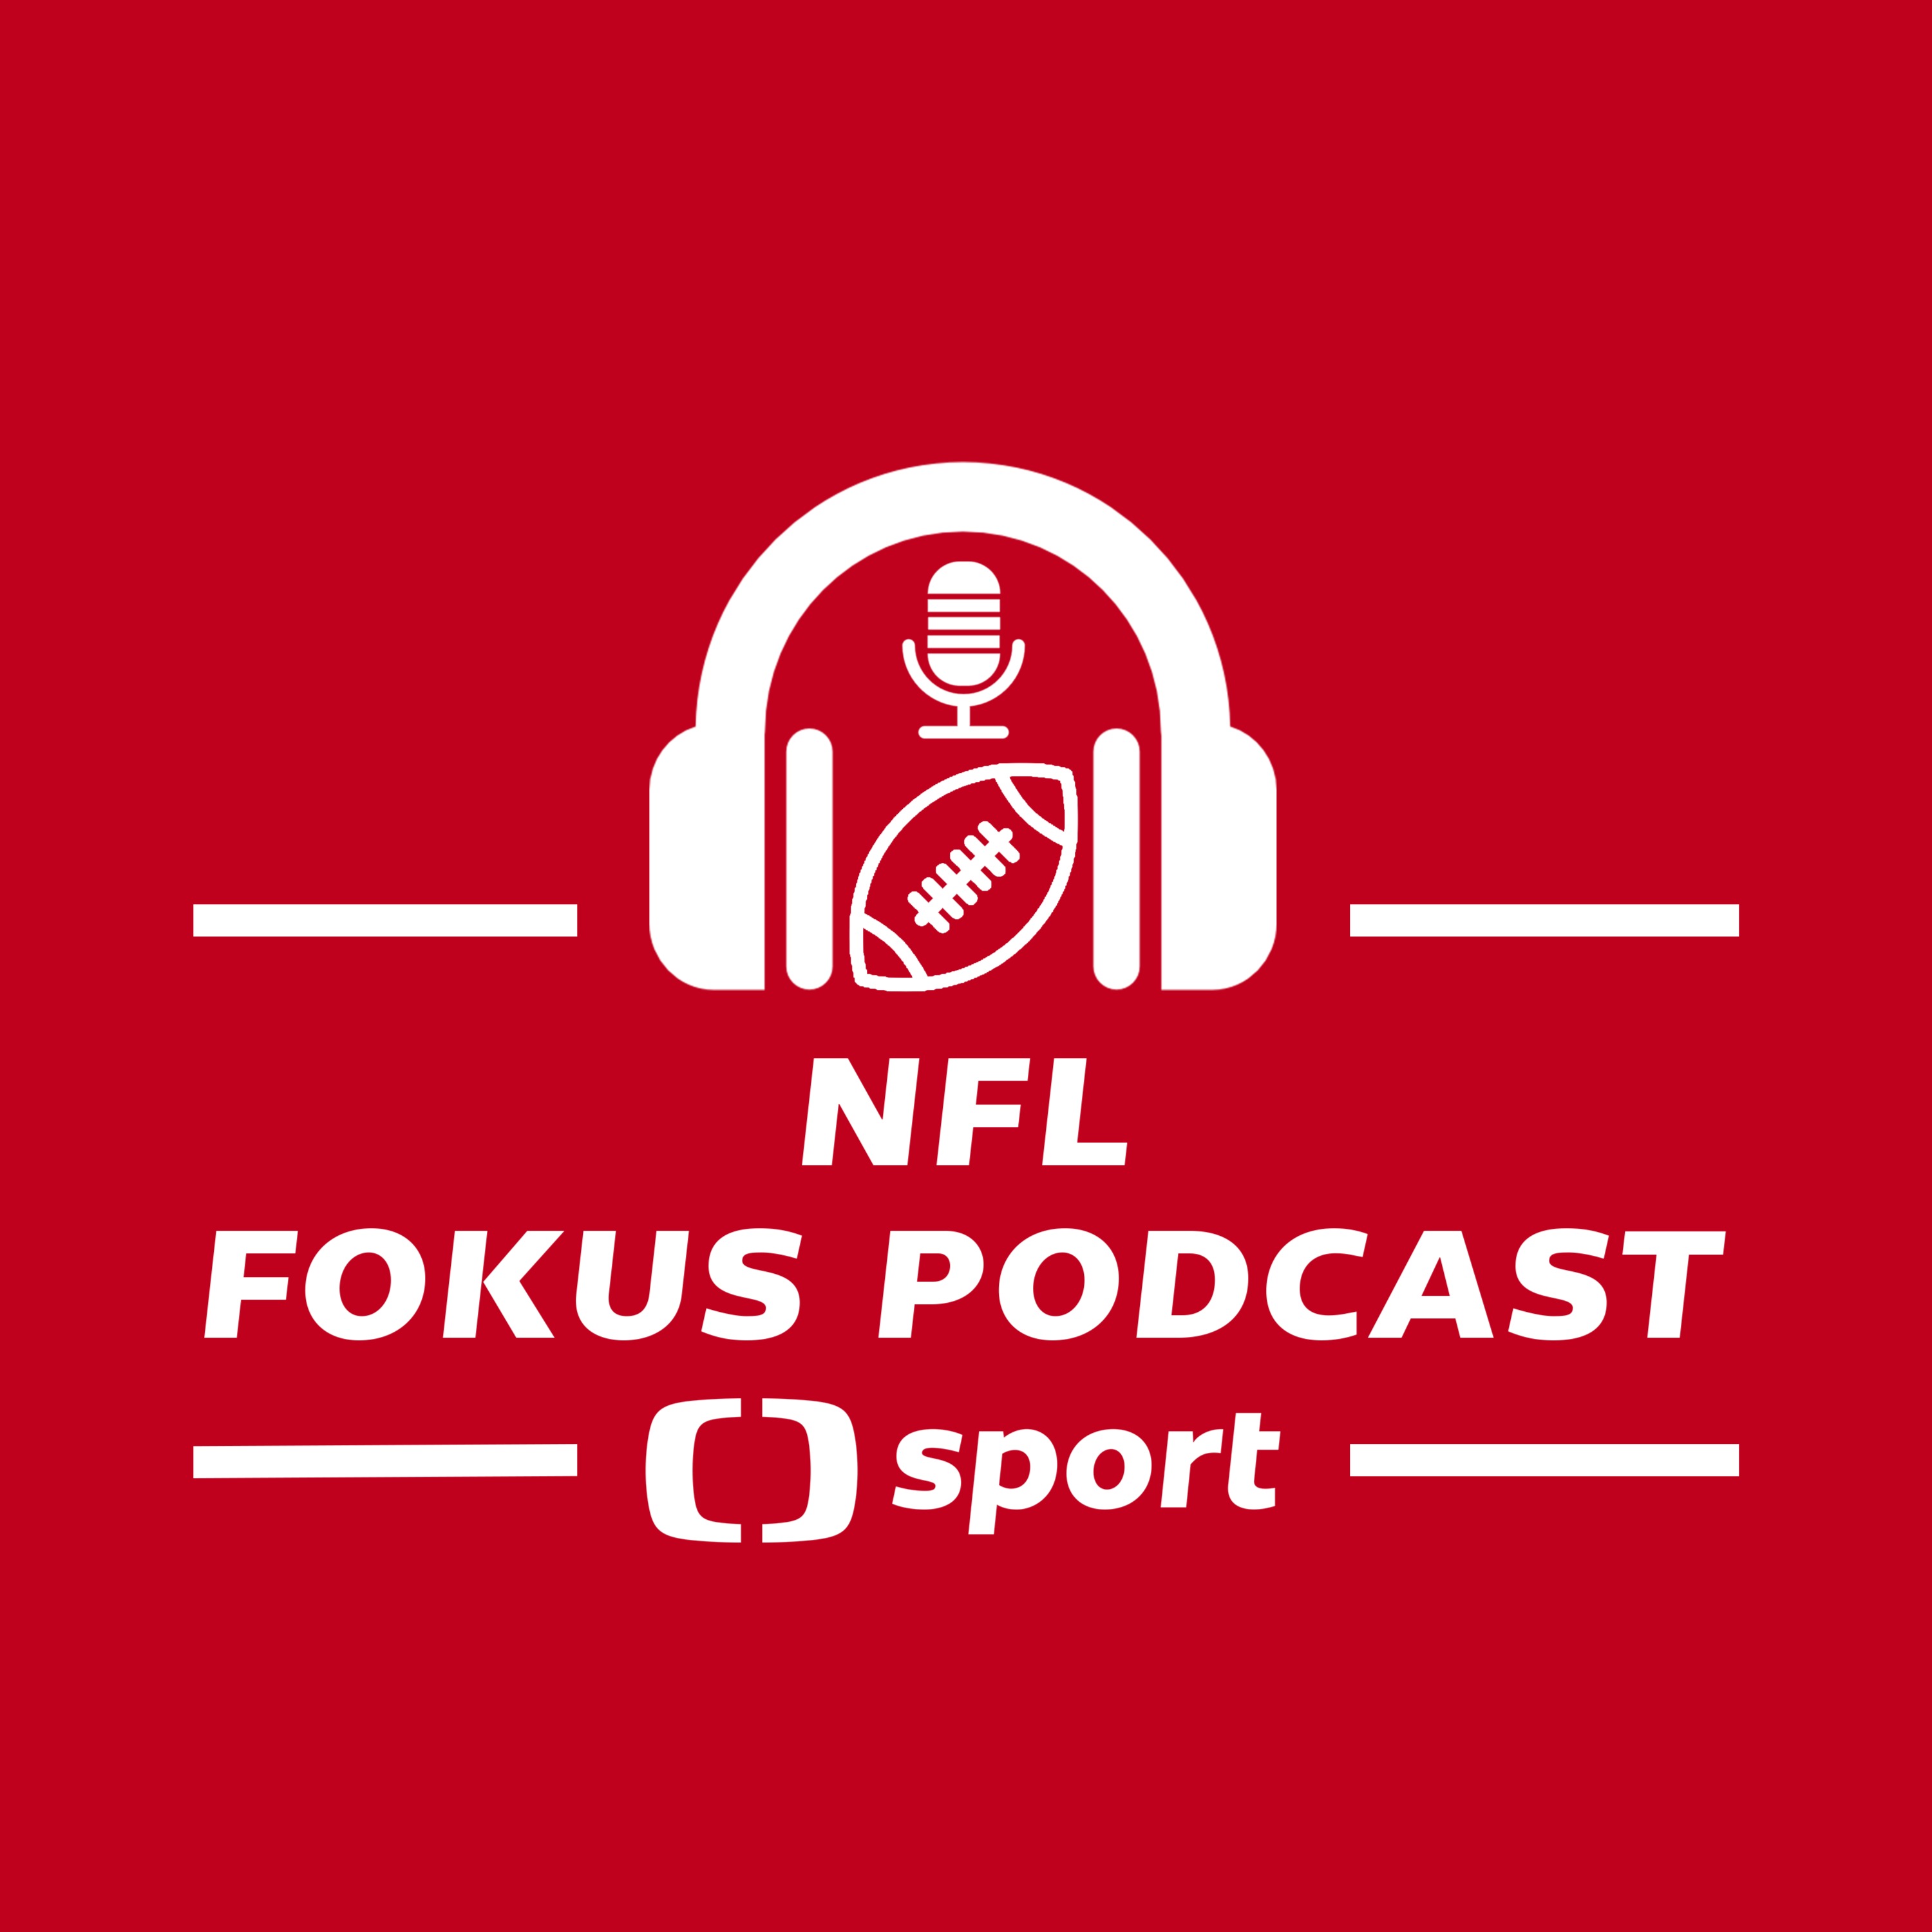 NFL Fokus podcast: Dozvuky Super Bowlu LVI a co bude dál s mistrovskými Rams?